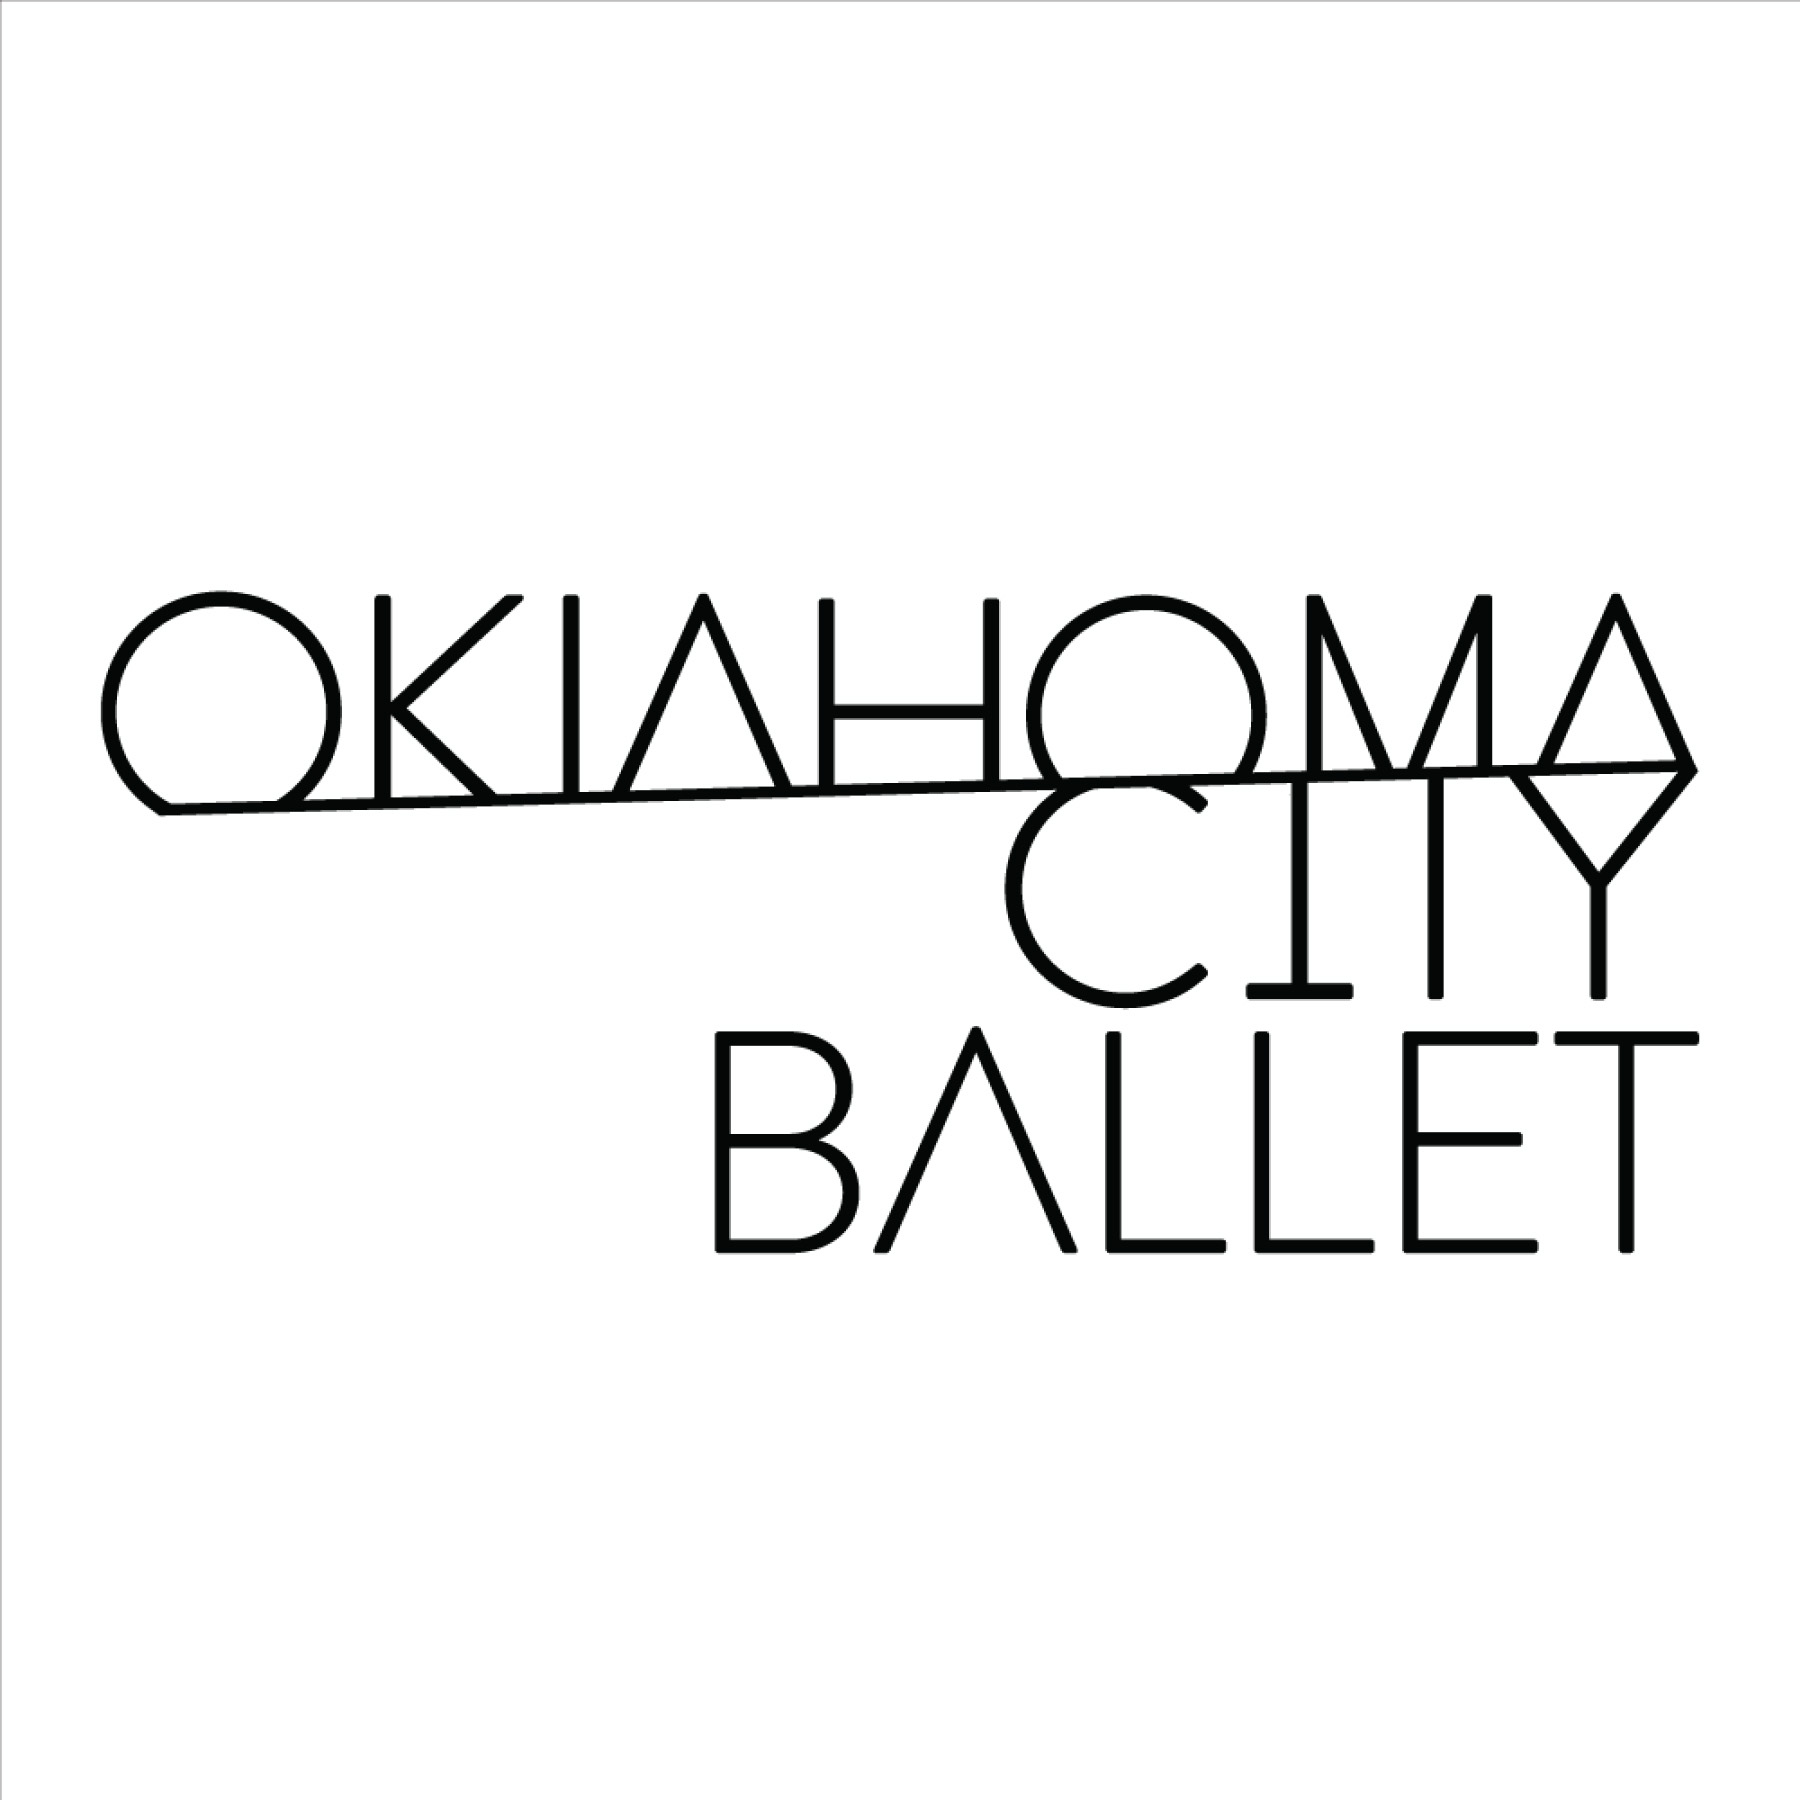 Oklahoma City Ballet: The Nutcracker- Sensory-Friendly Performance at Thelma Gaylord at Civic Center Music Hall